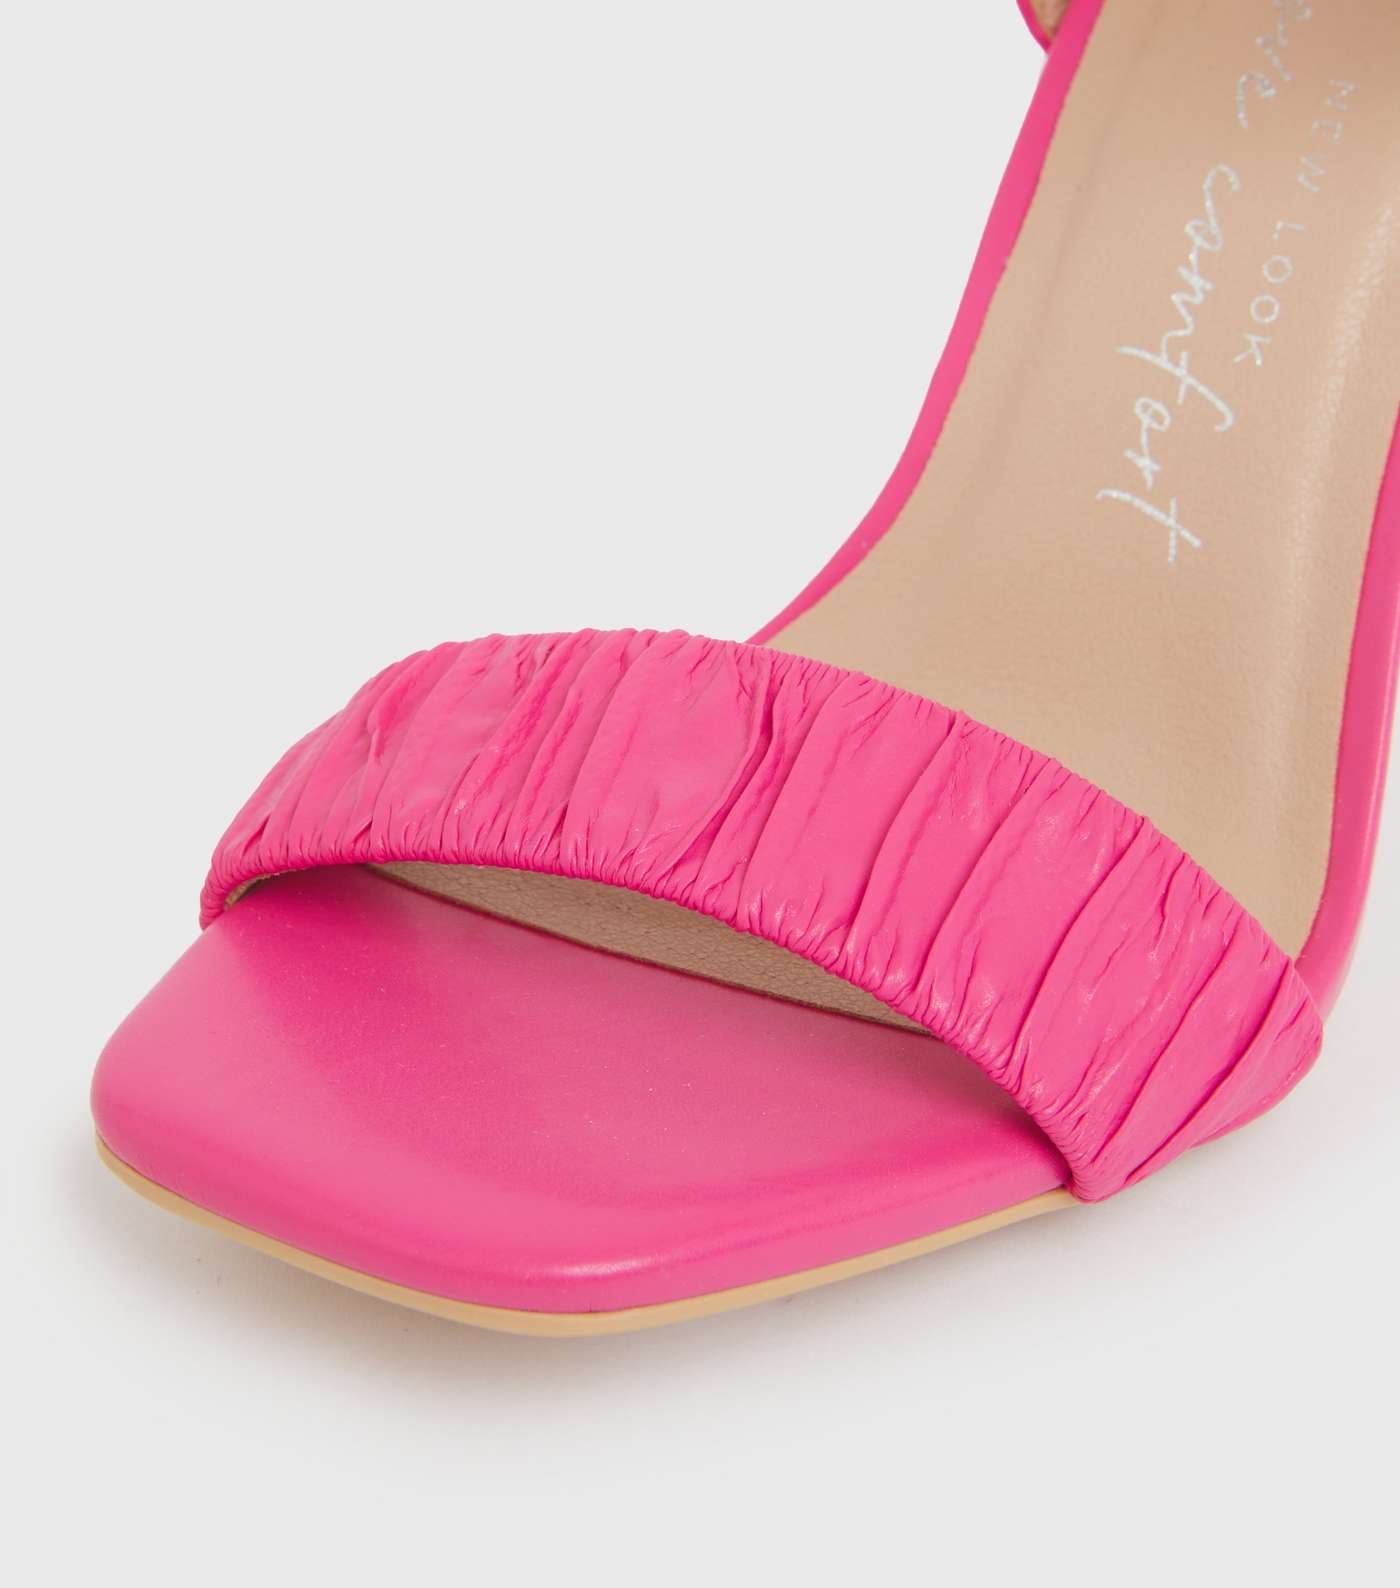 Wide Fit Bright Pink Ruched Strap Stiletto Heel Sandals Image 4